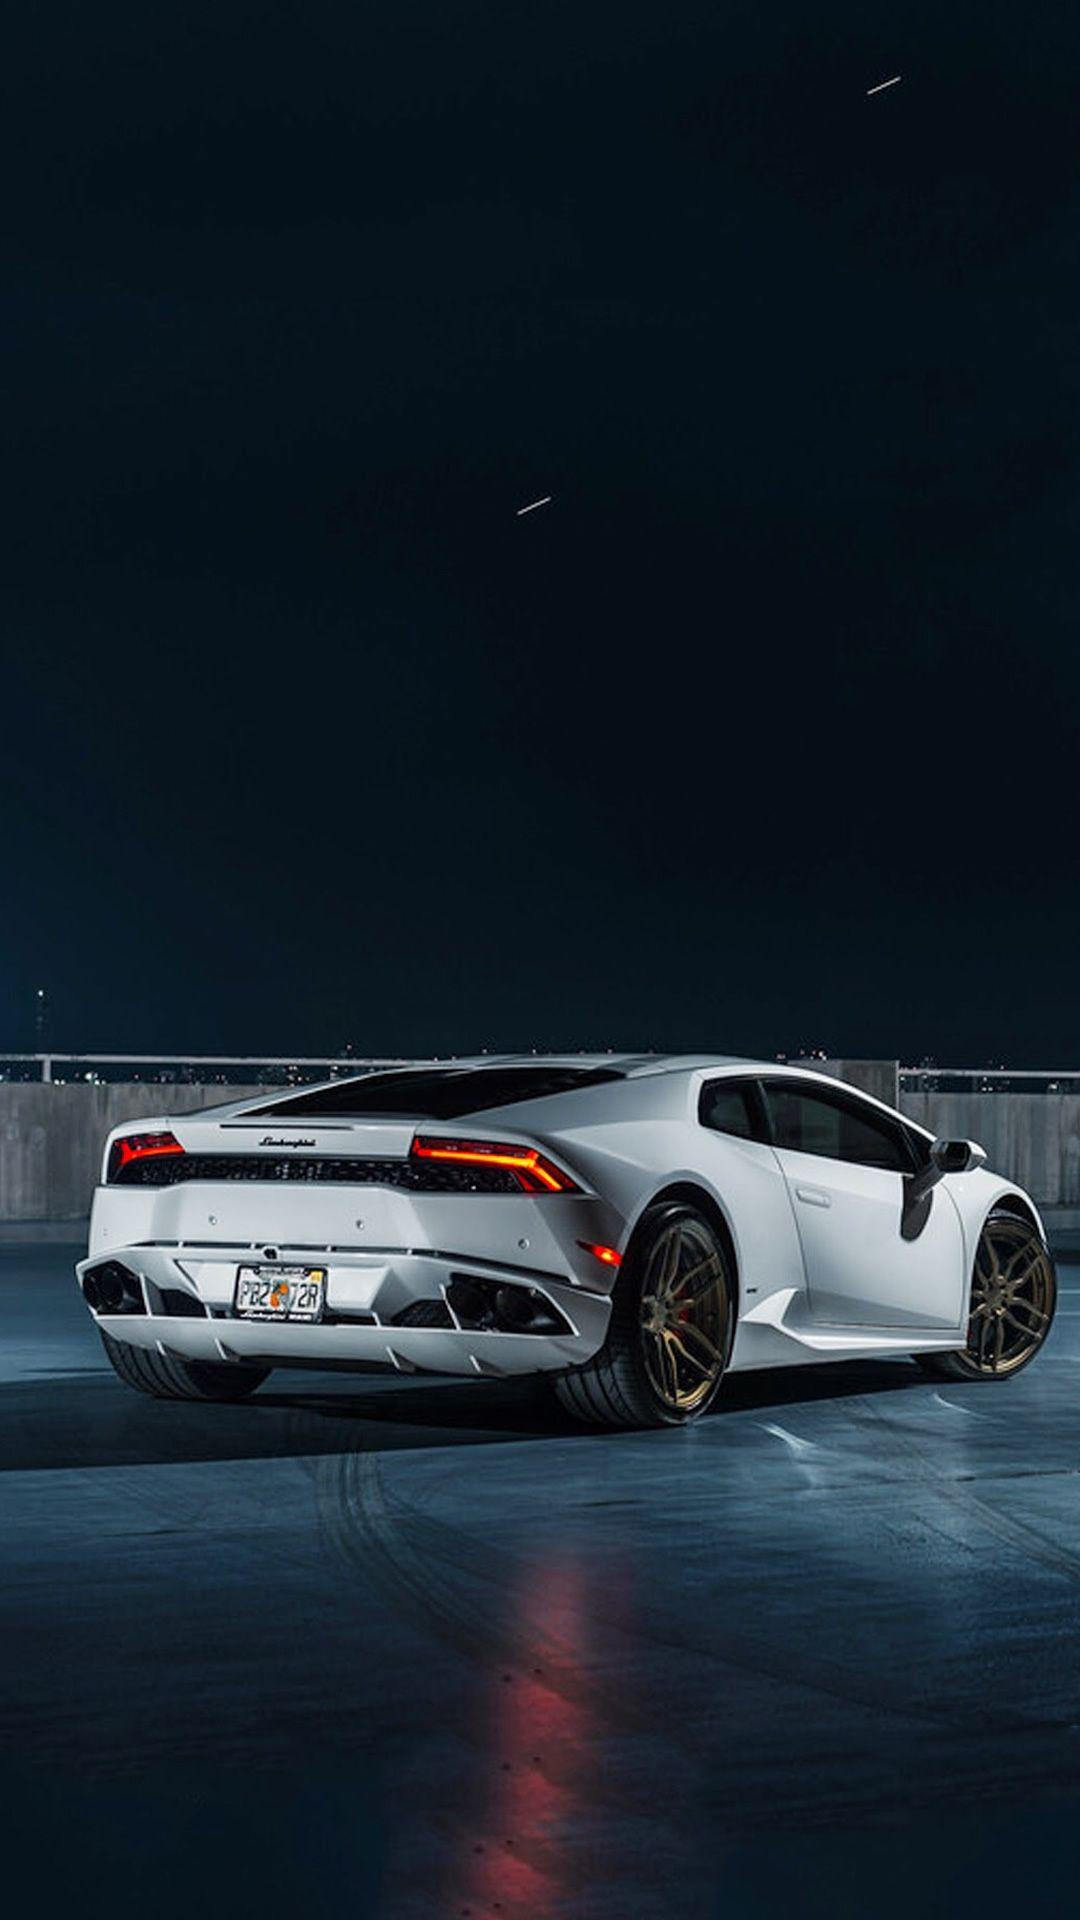 Lamborghini In Night #iPhone #wallpaper. iPhone 8 wallpaper